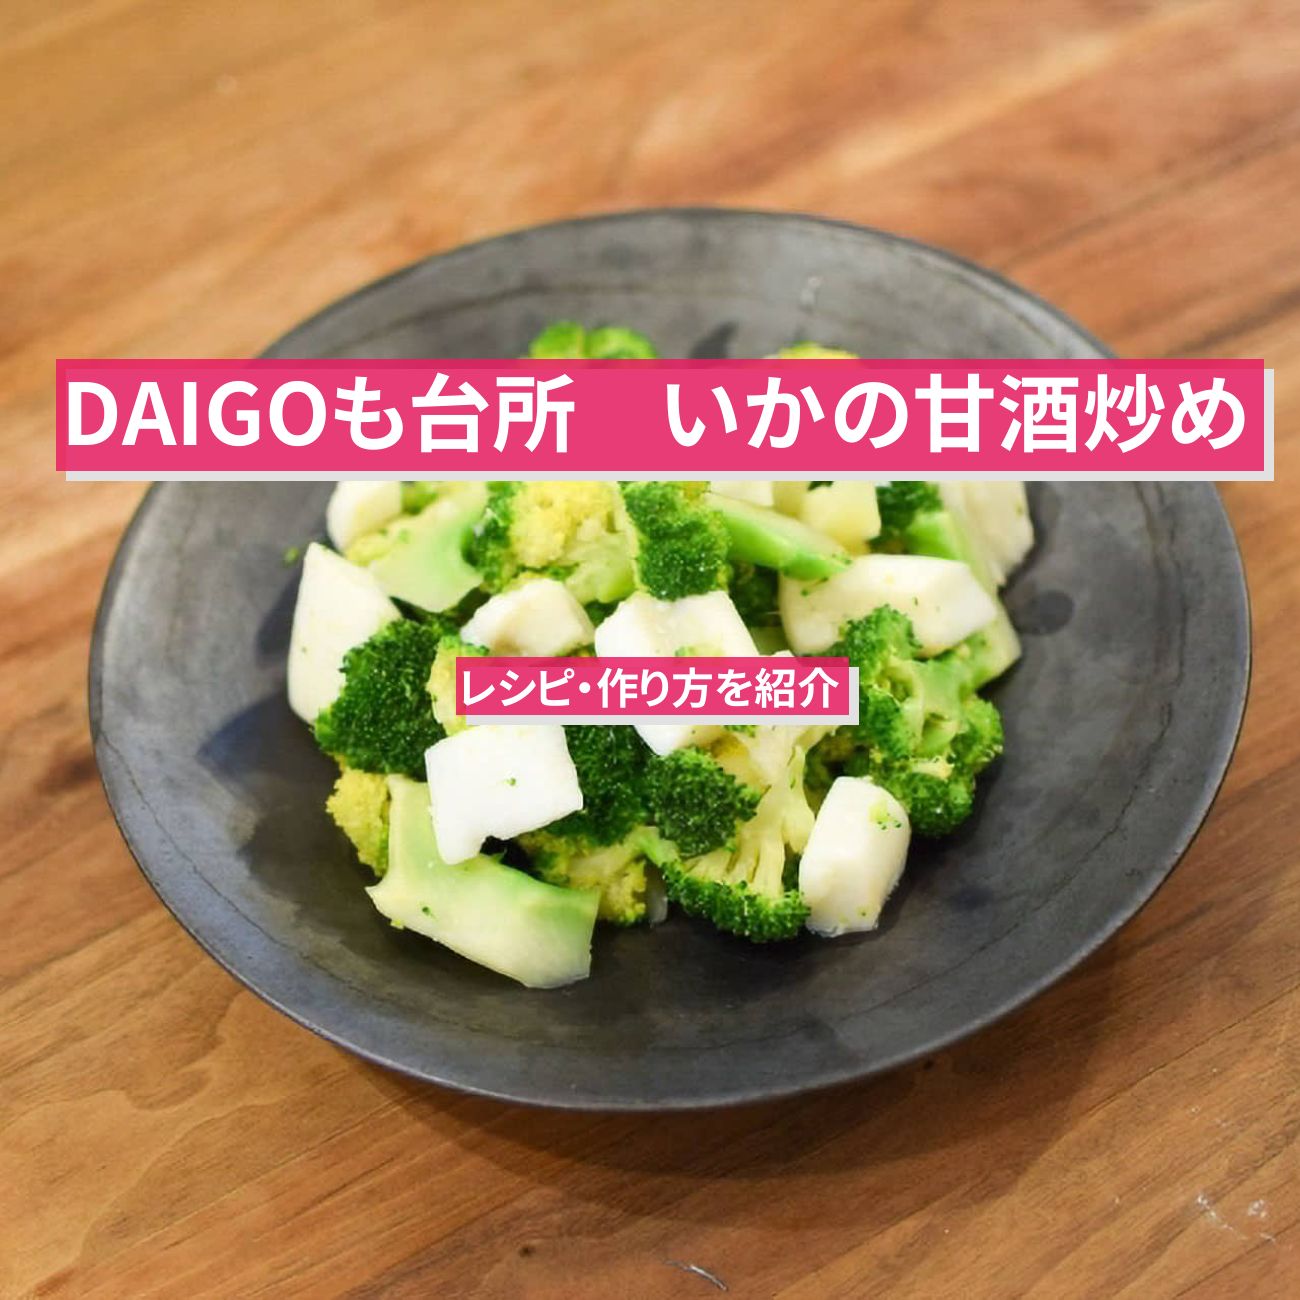 【DAIGOも台所】『いかの甘酒炒め』のレシピ・作り方を紹介〔ダイゴも台所〕